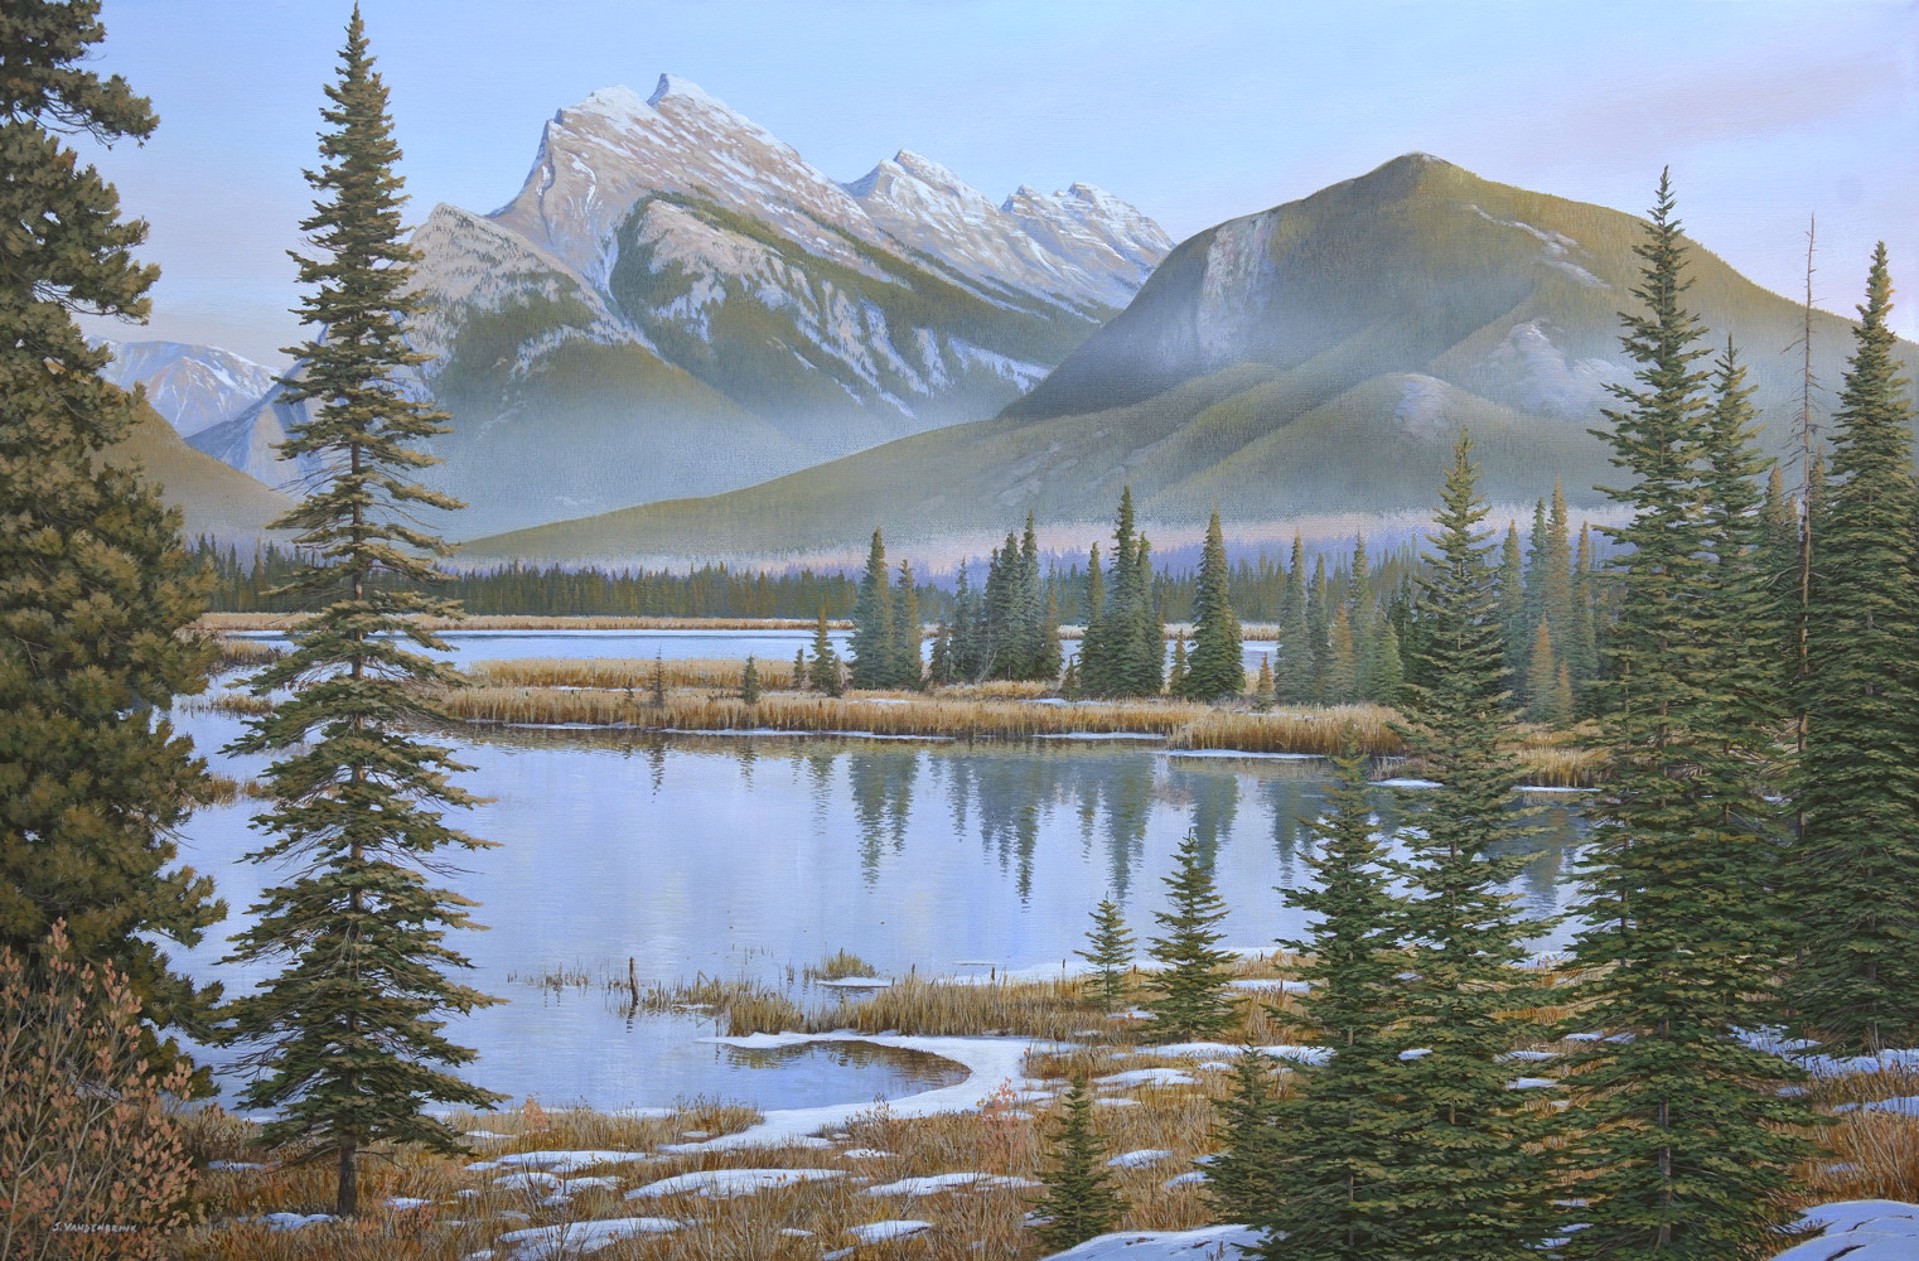 The Season of Change (Vermillion Lakes, Banff) by Jake Vandenbrink